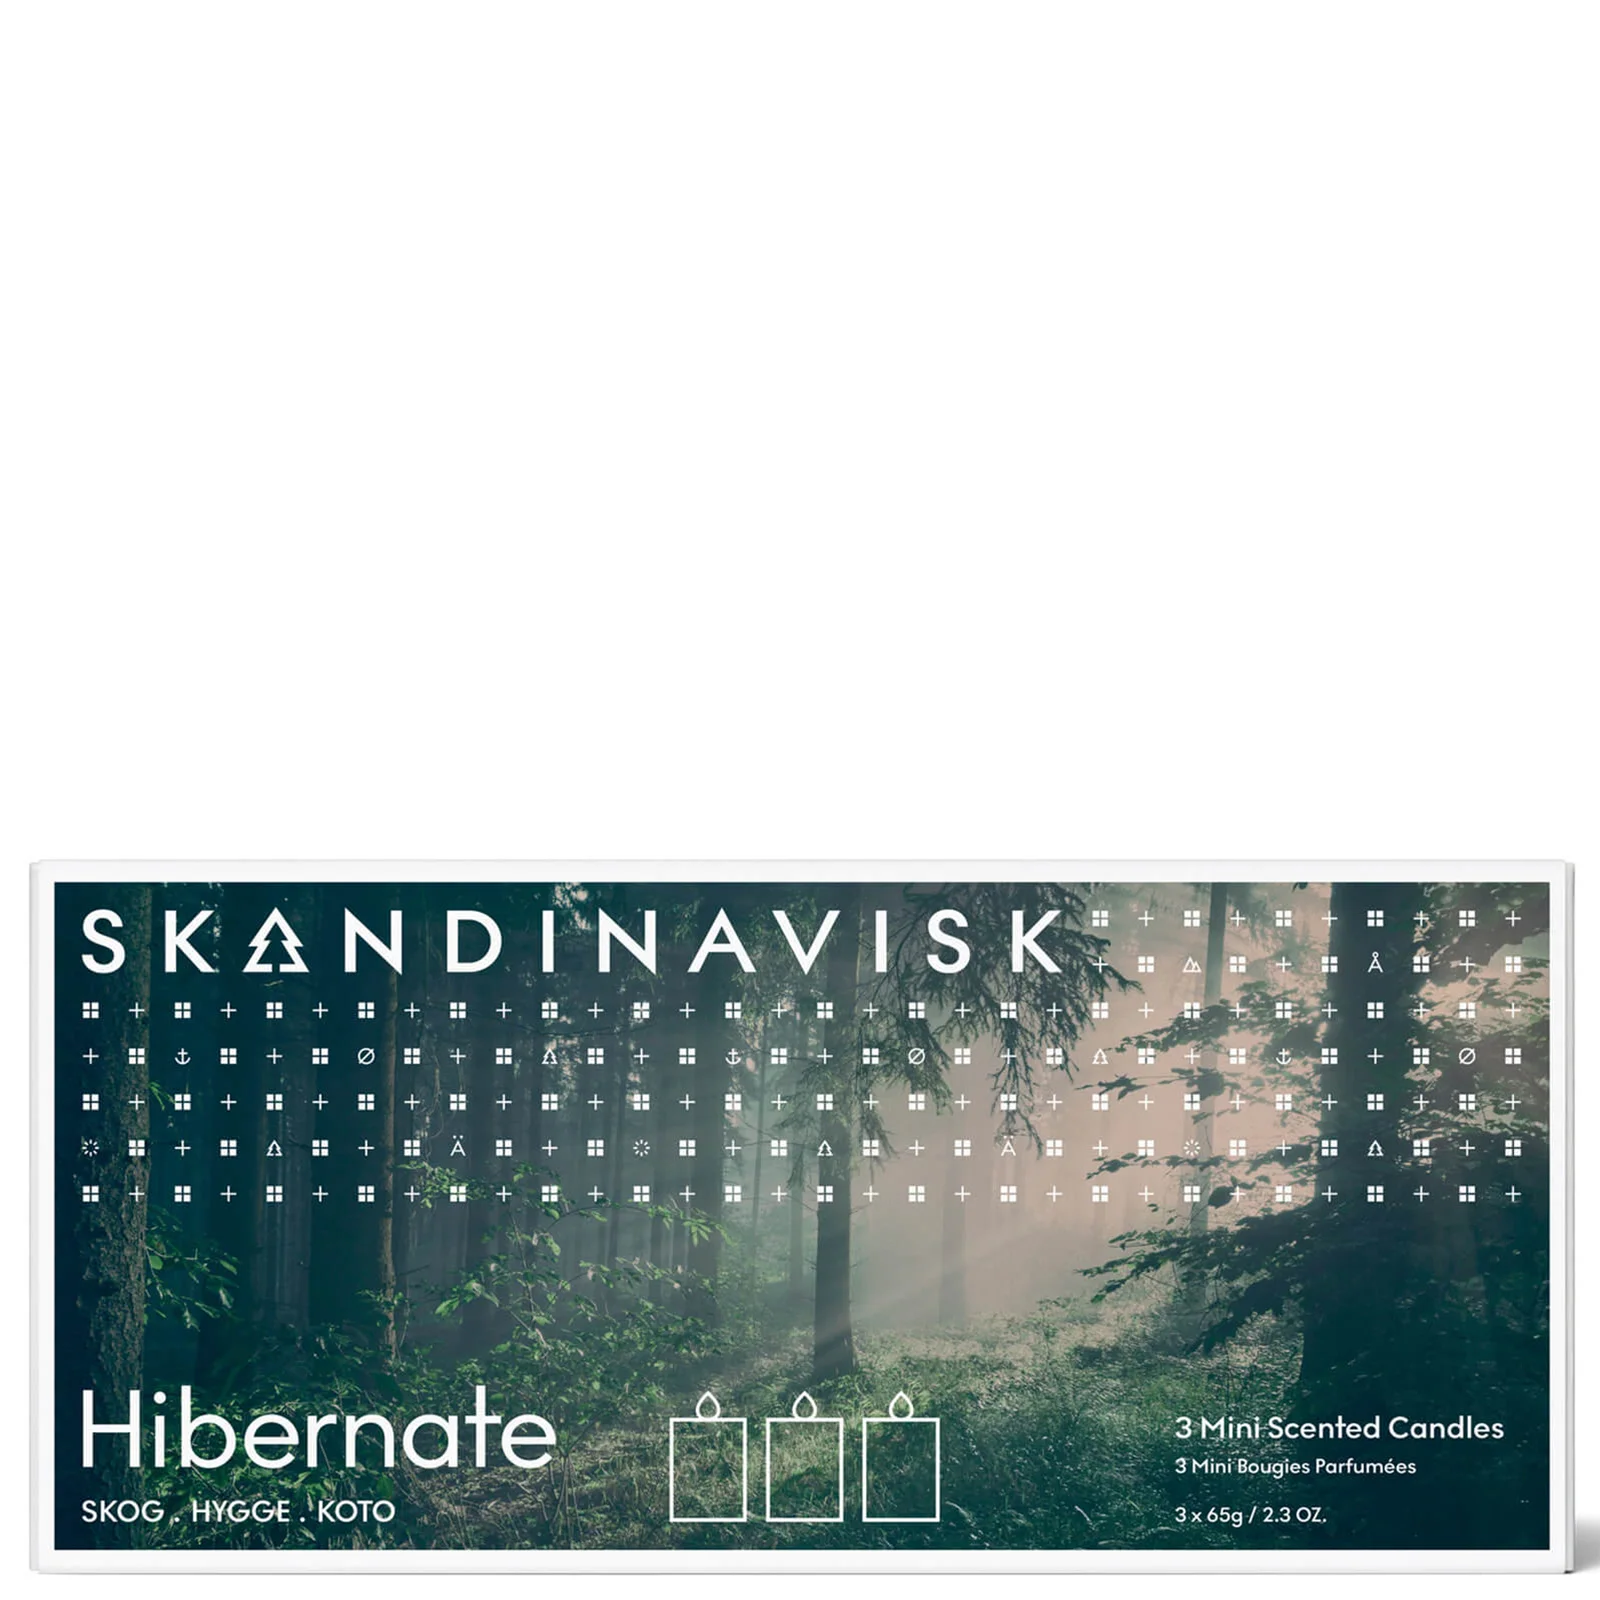 SKANDINAVISK Hibernation Gift Set - Skog - Hygge - Koto - Set of 3 Image 1